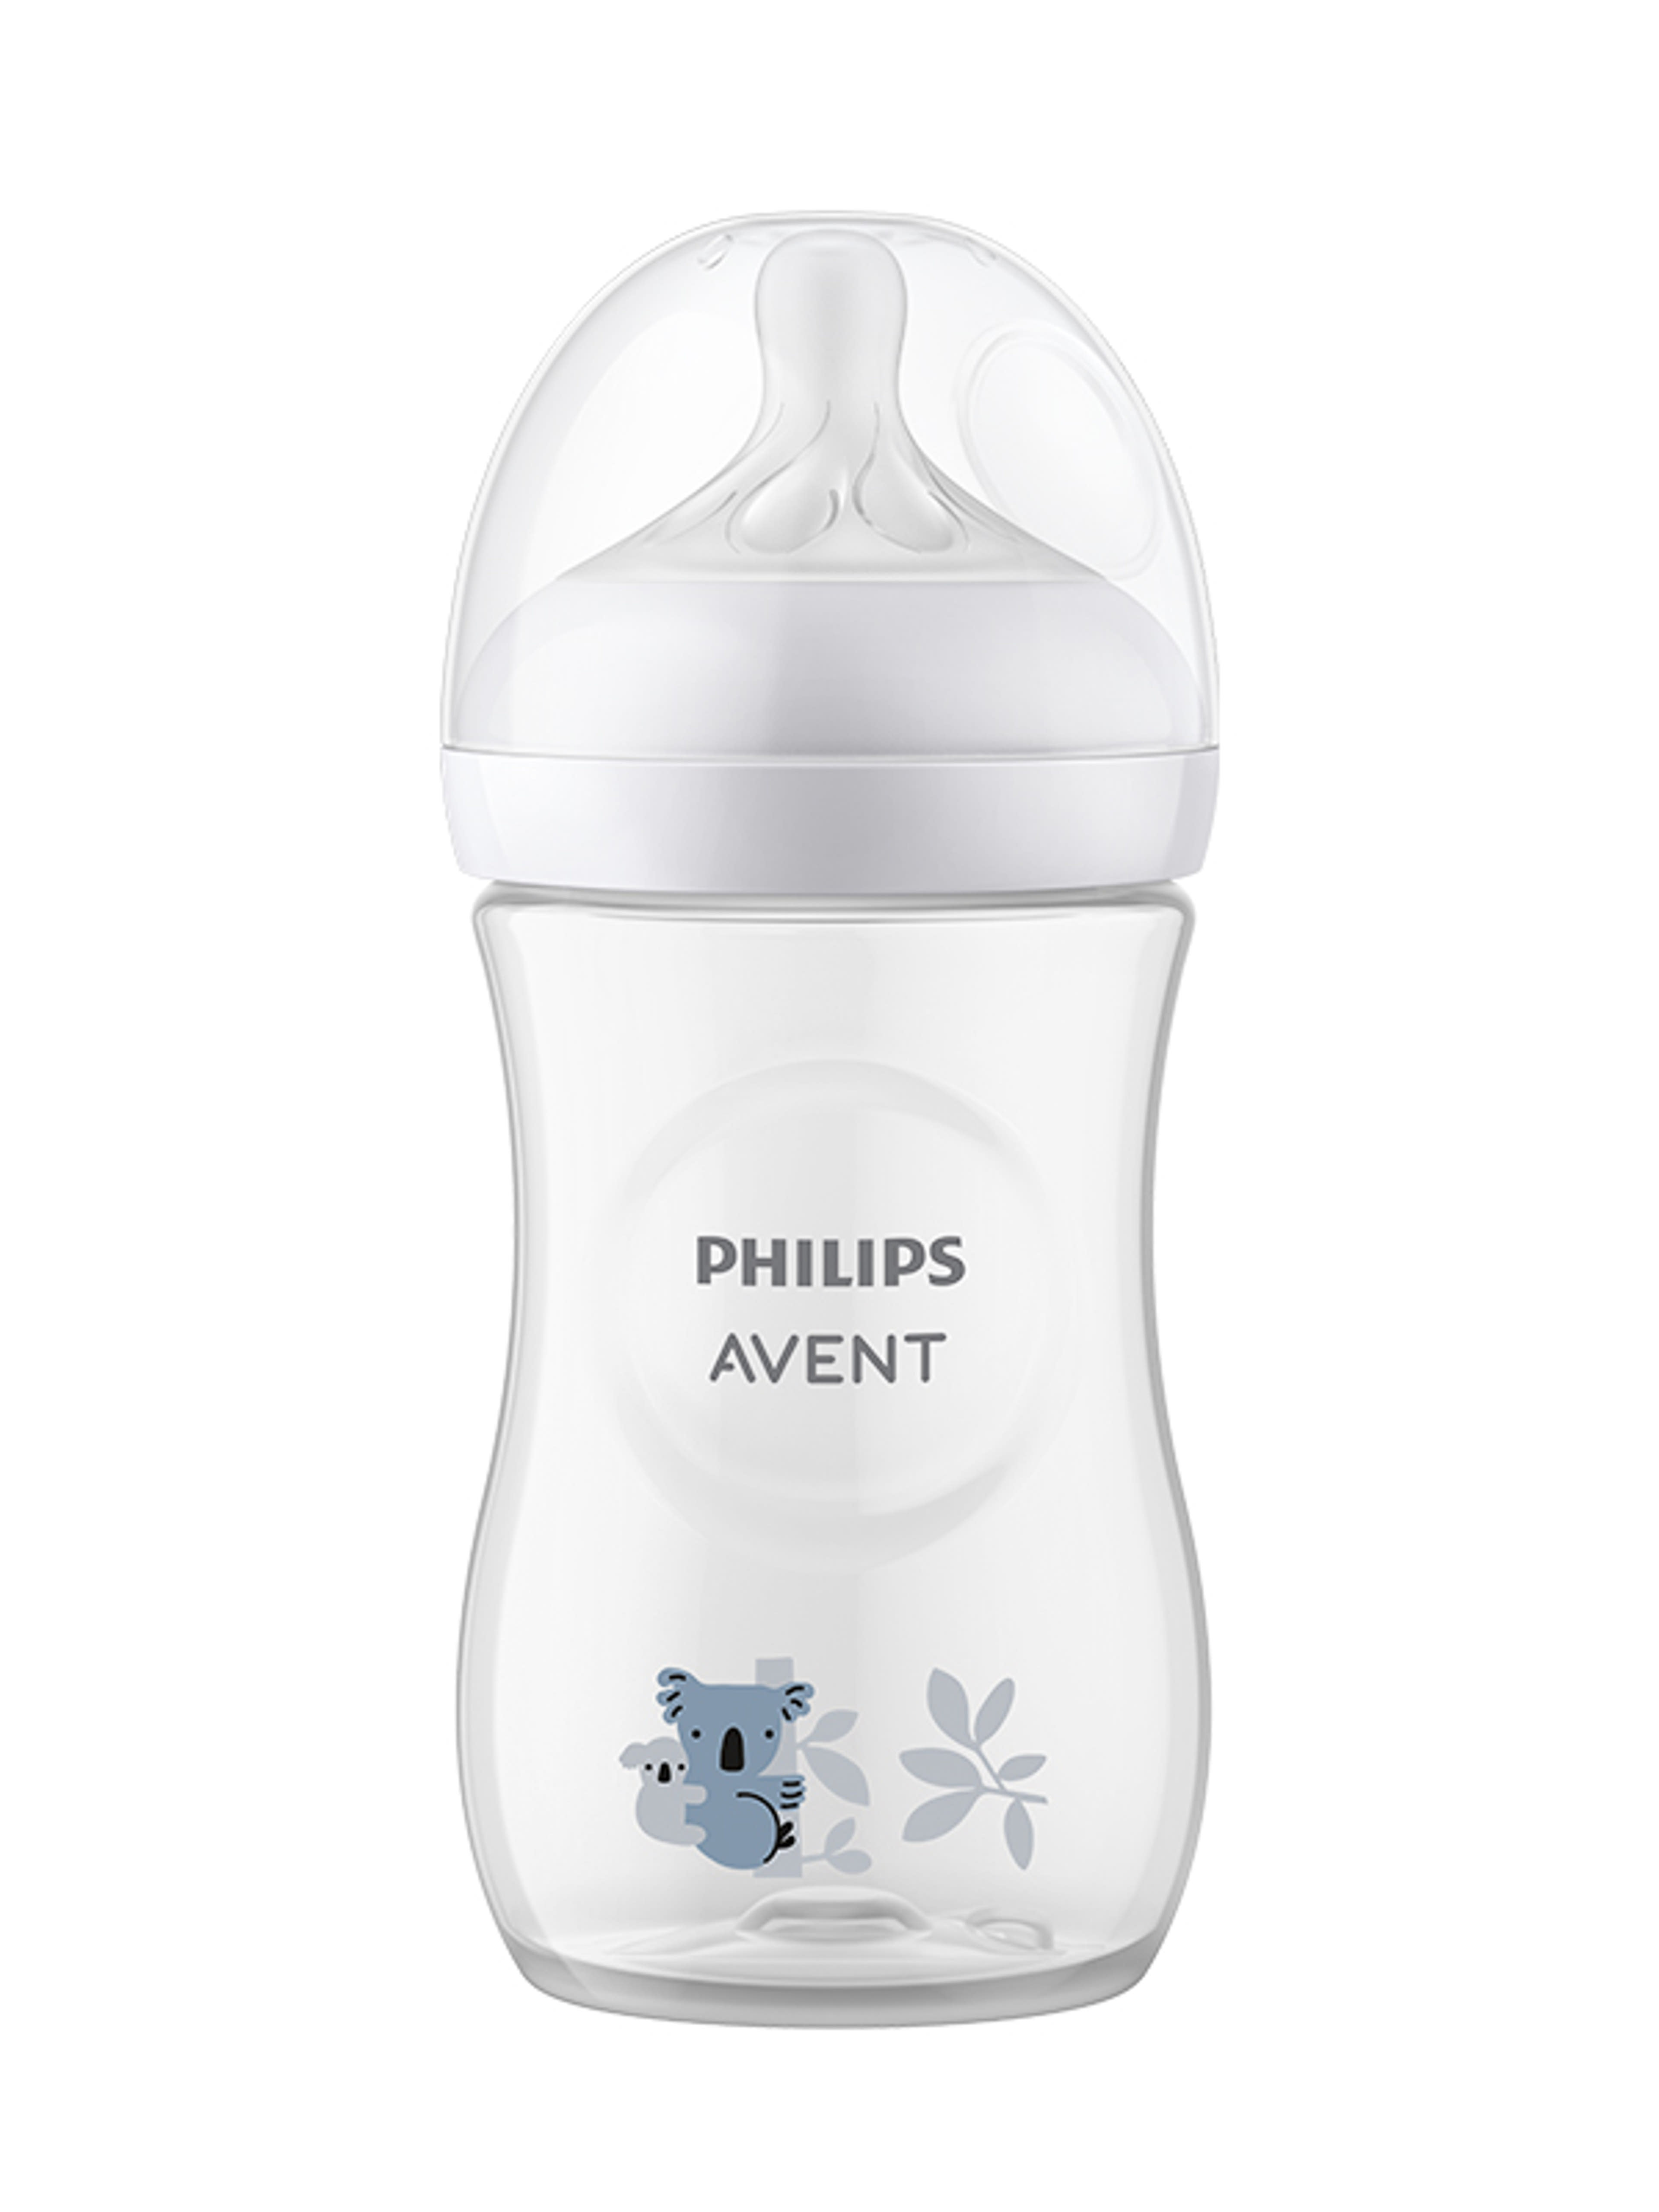 Philips Avent Natural Response cumisüveg 1 hónapos kortól 260 ml - 1 db-4